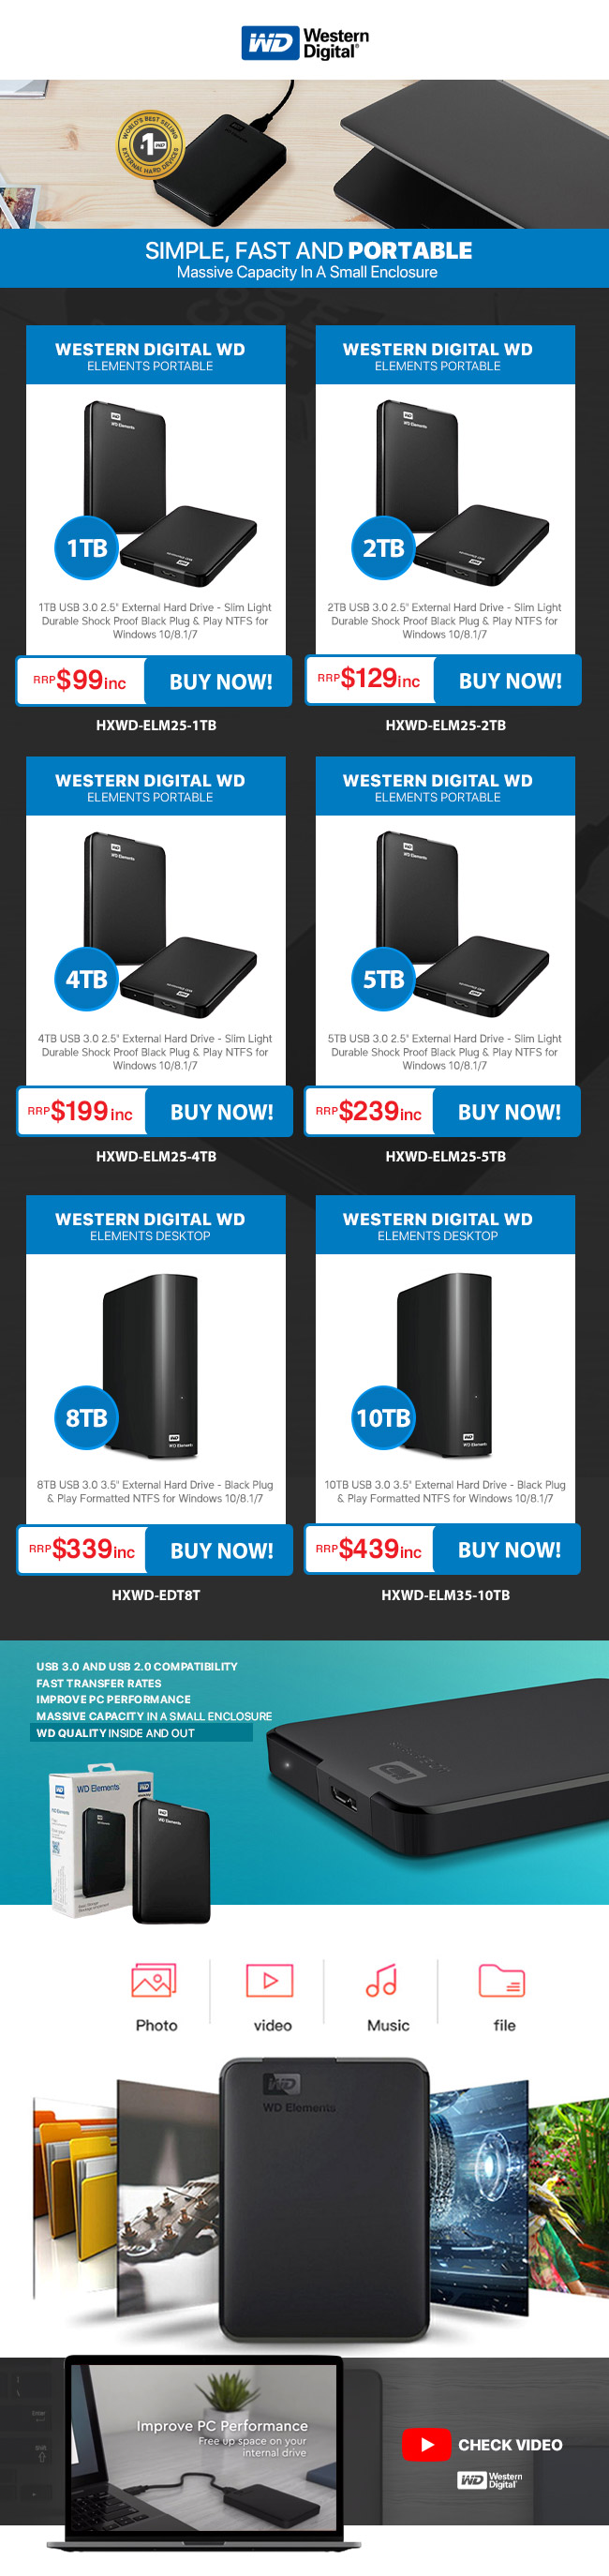 Western Digital Intel Bundle Promo